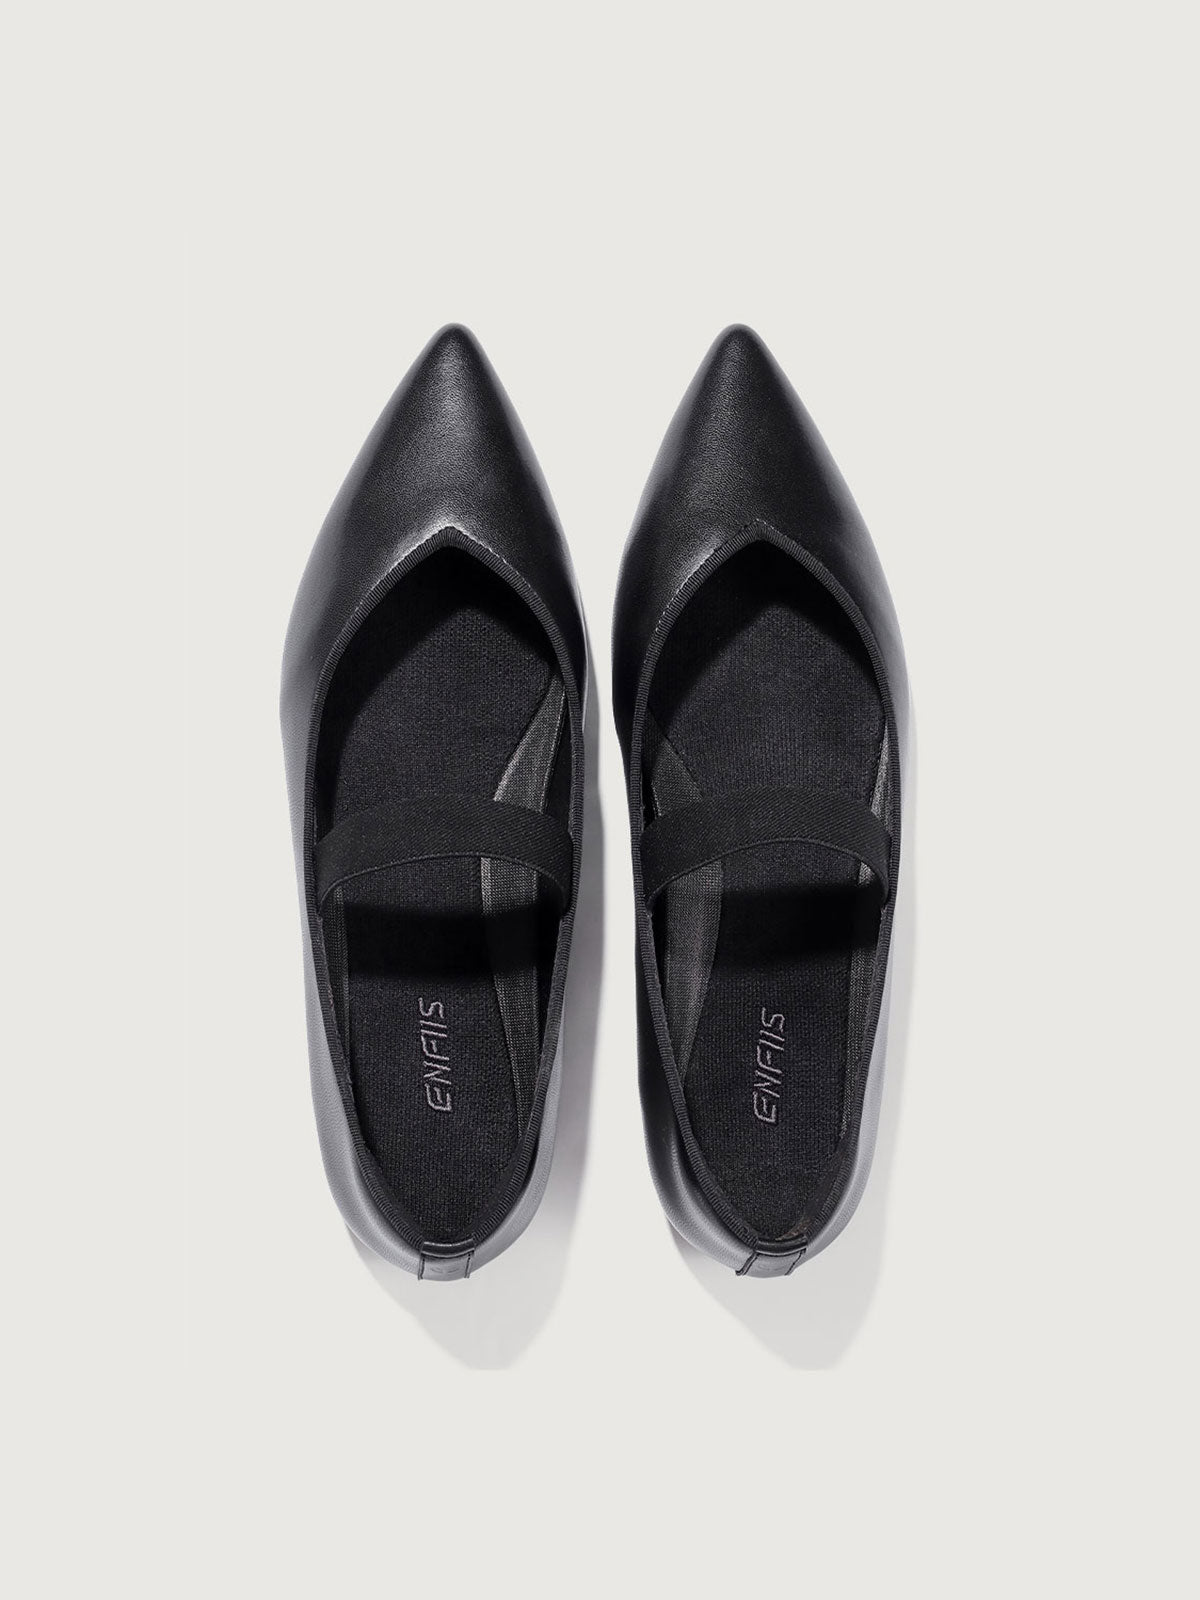 Black Sheepskin Pattern Microfiber Mary Jane Shoes. Flats - ENFIIS